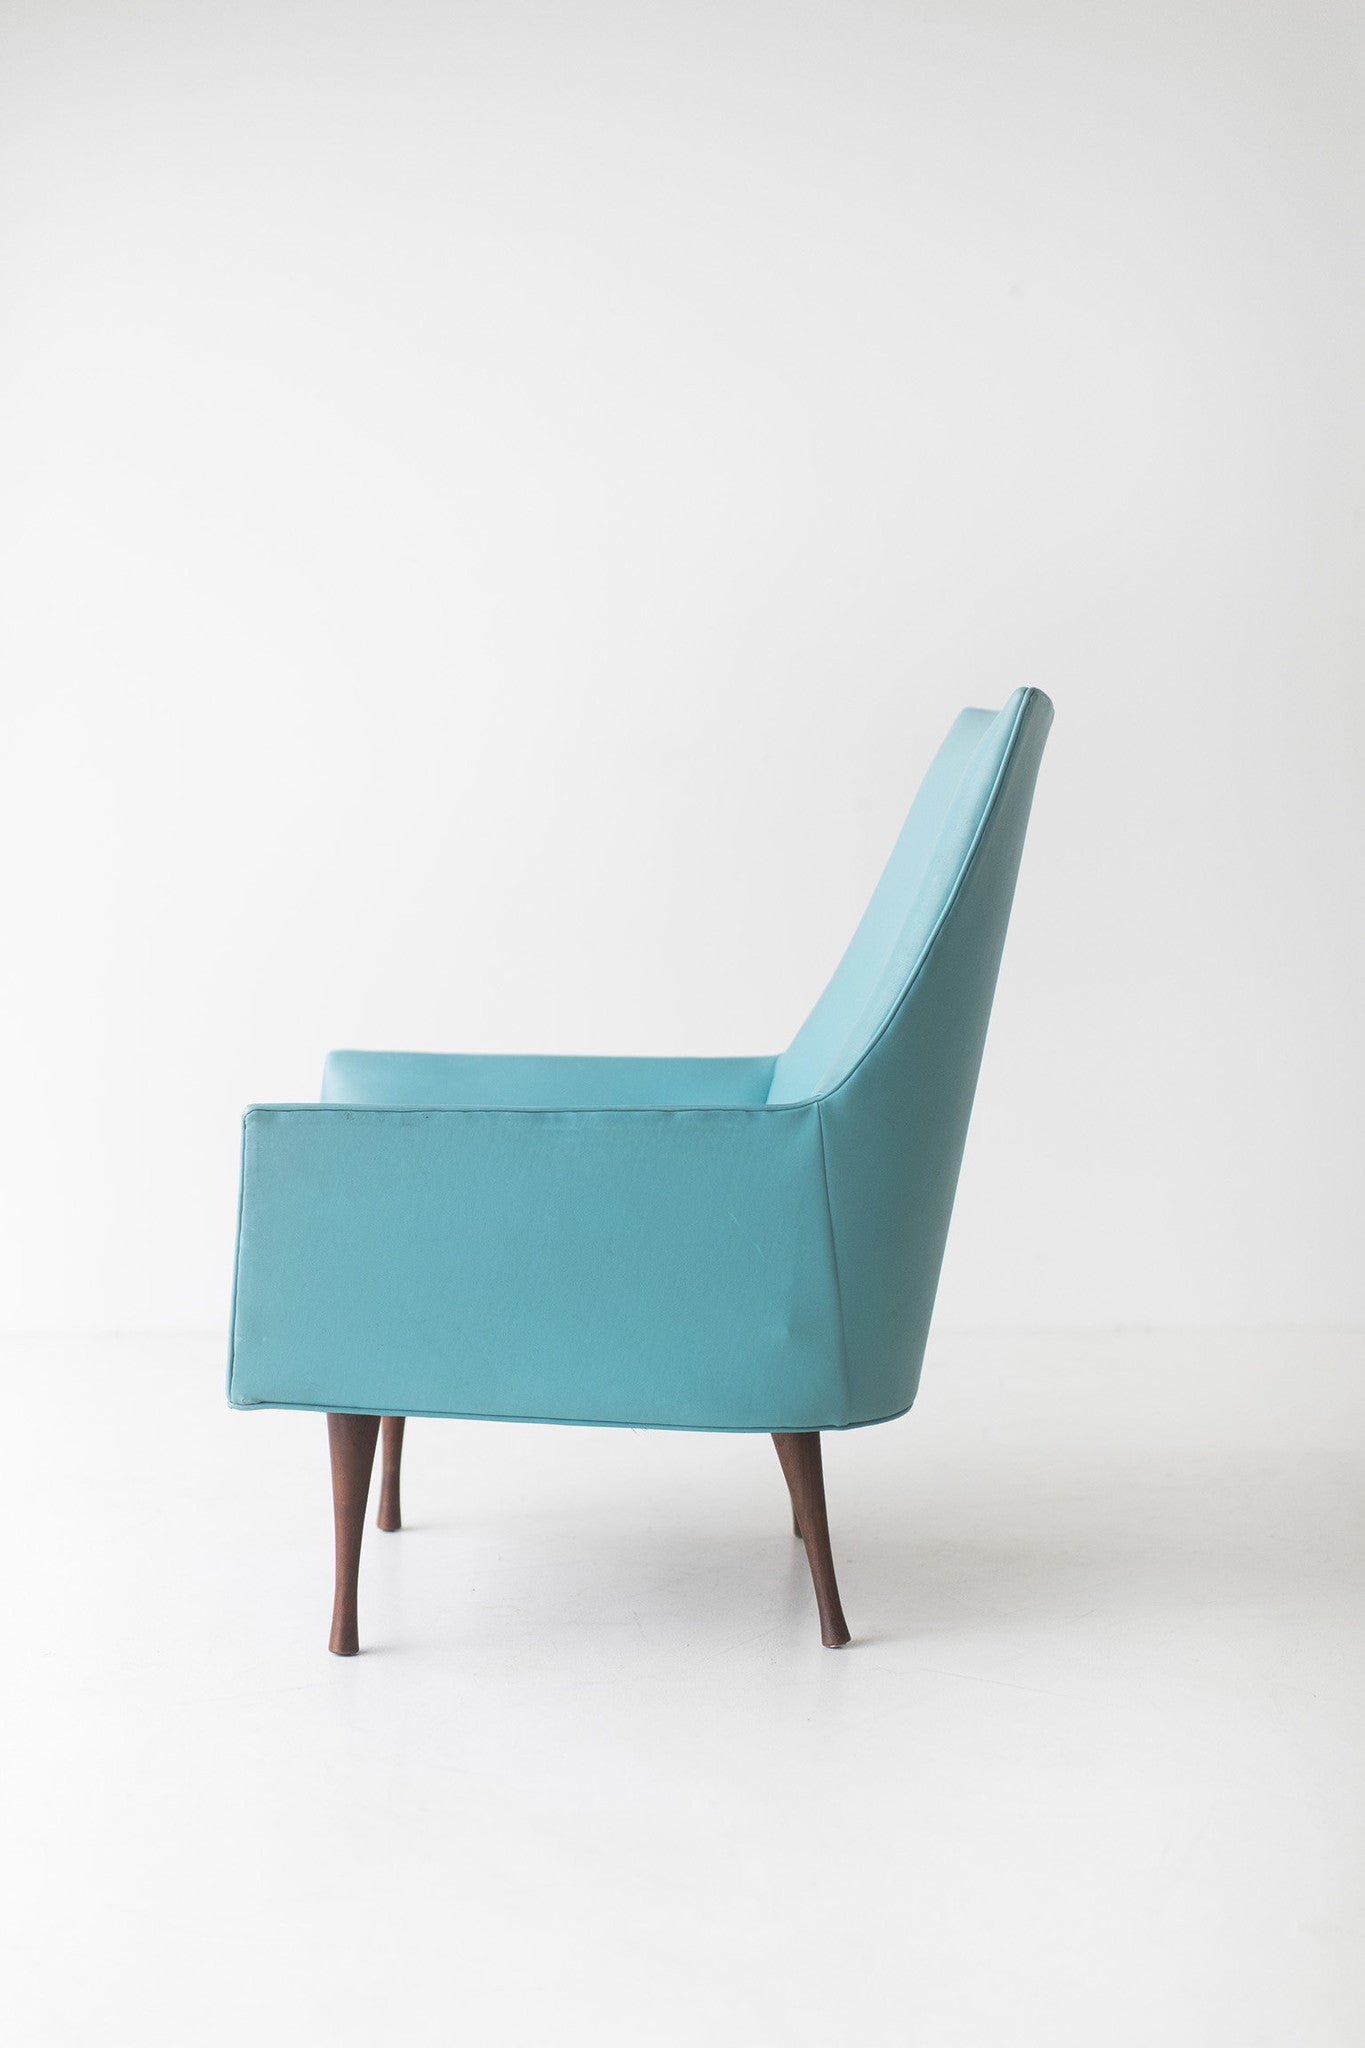 Paul-McCobb-Lounge-Chair-for-Widdicomb-Symmetric-Group-03